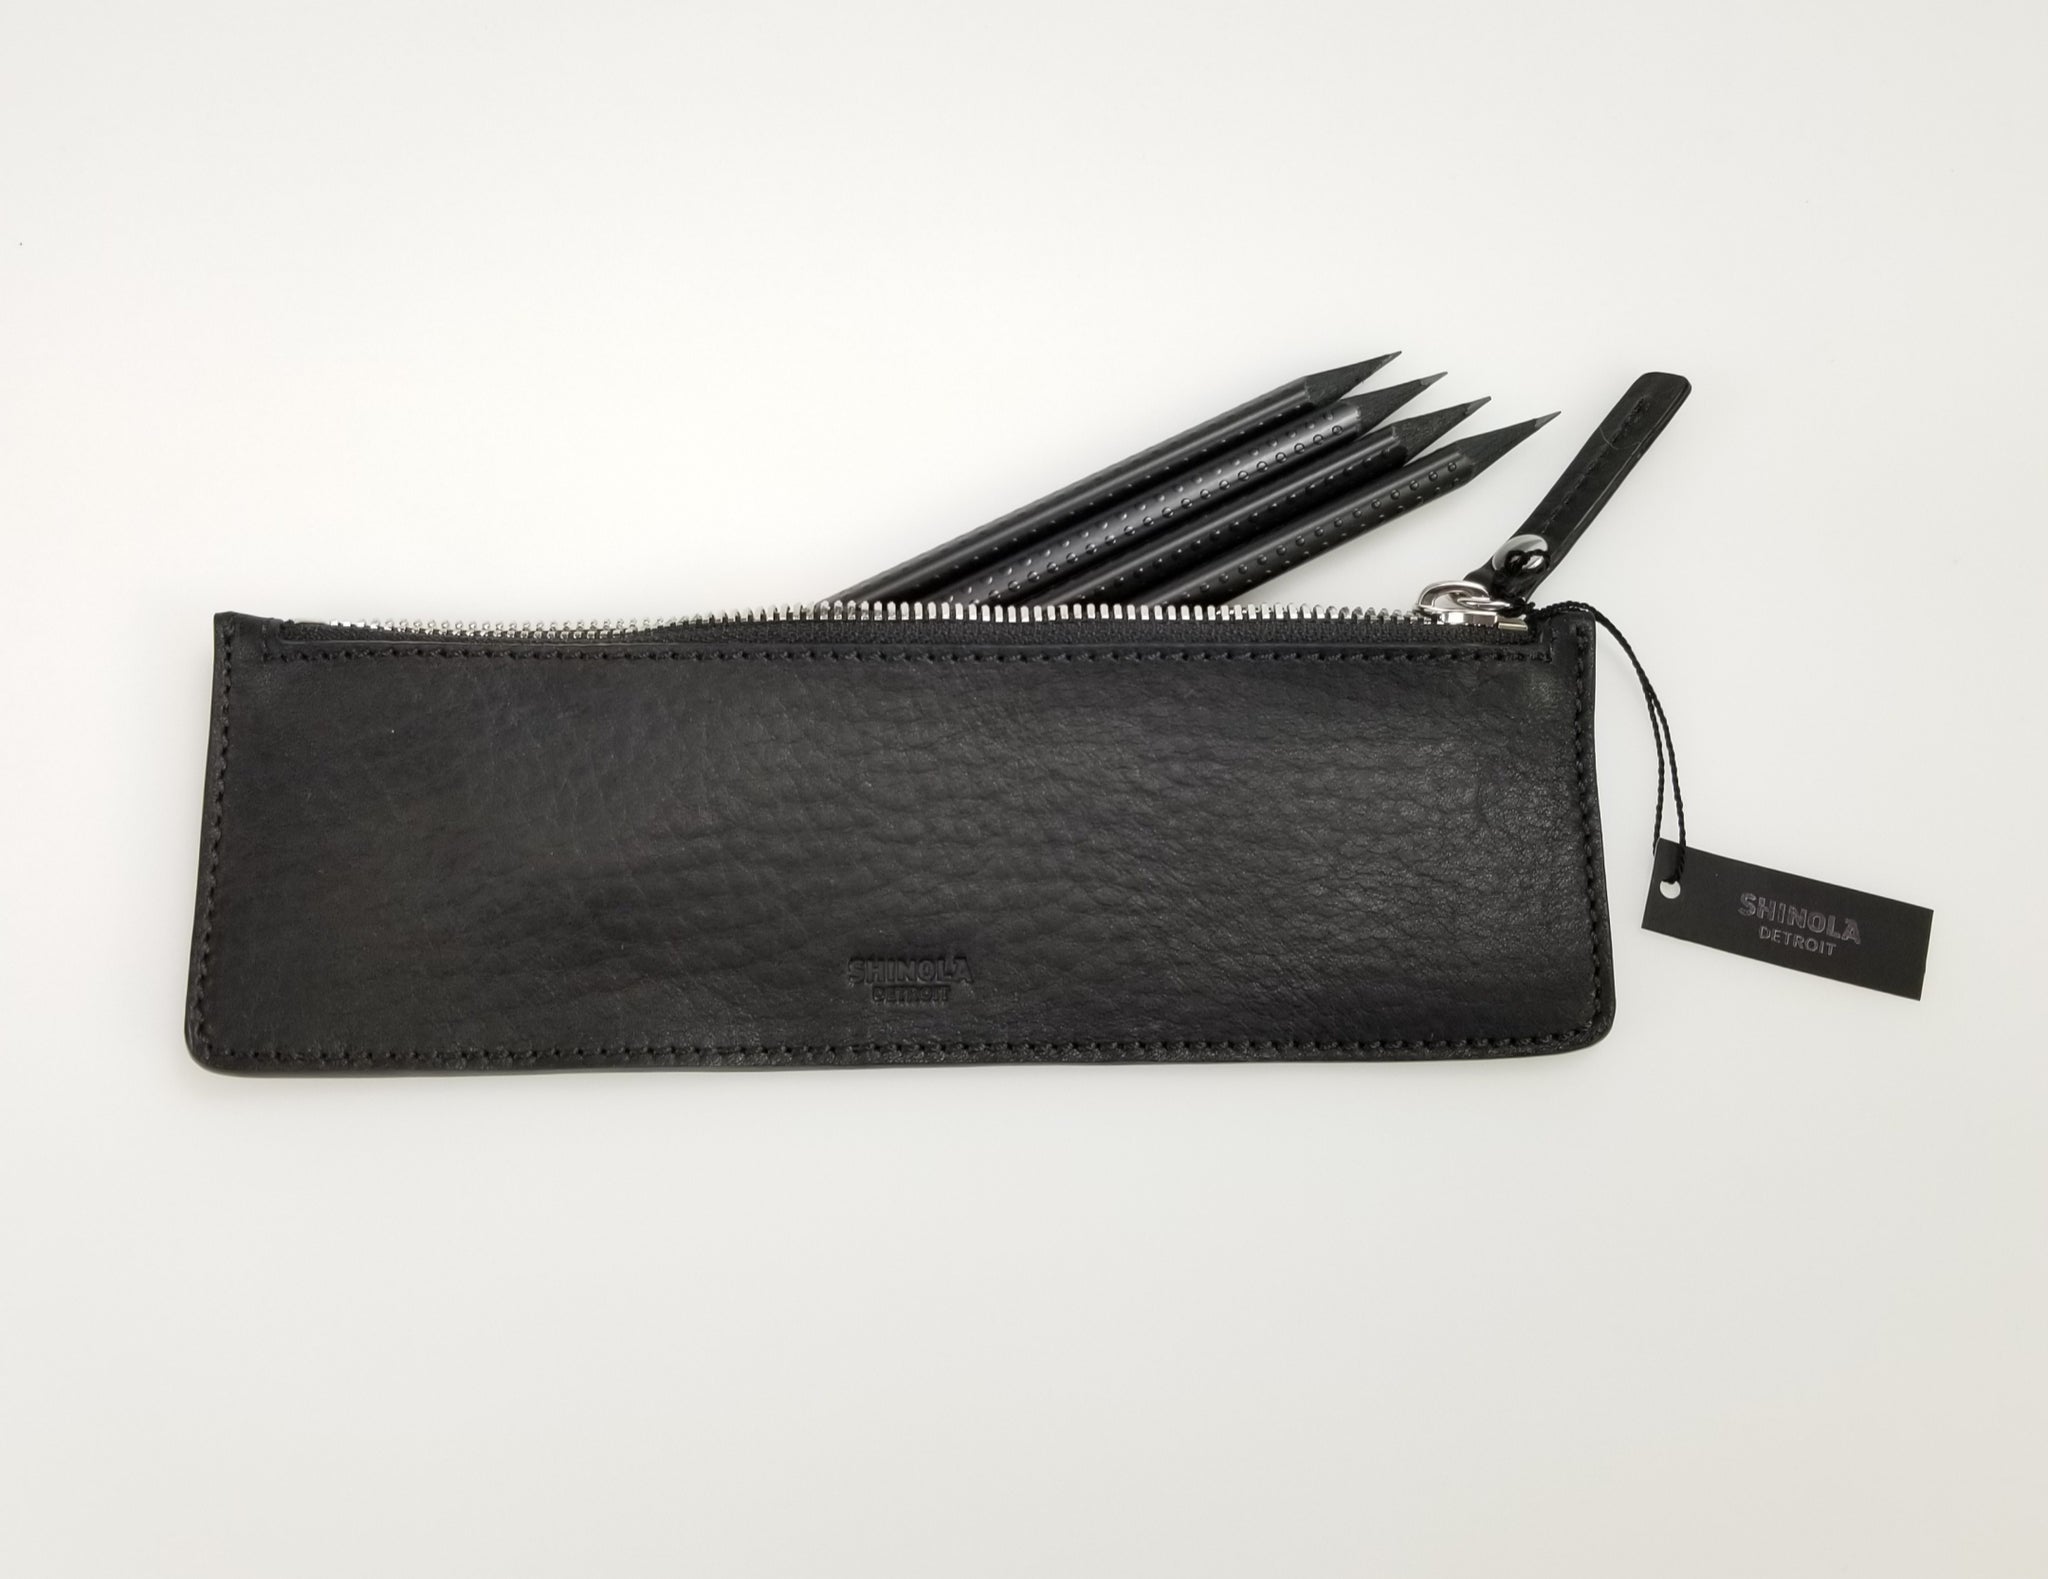 Shinola New Shinola Black Leather Zipper Pencil Pouch Case (S0720014230) freeshipping - RiNo Distribution